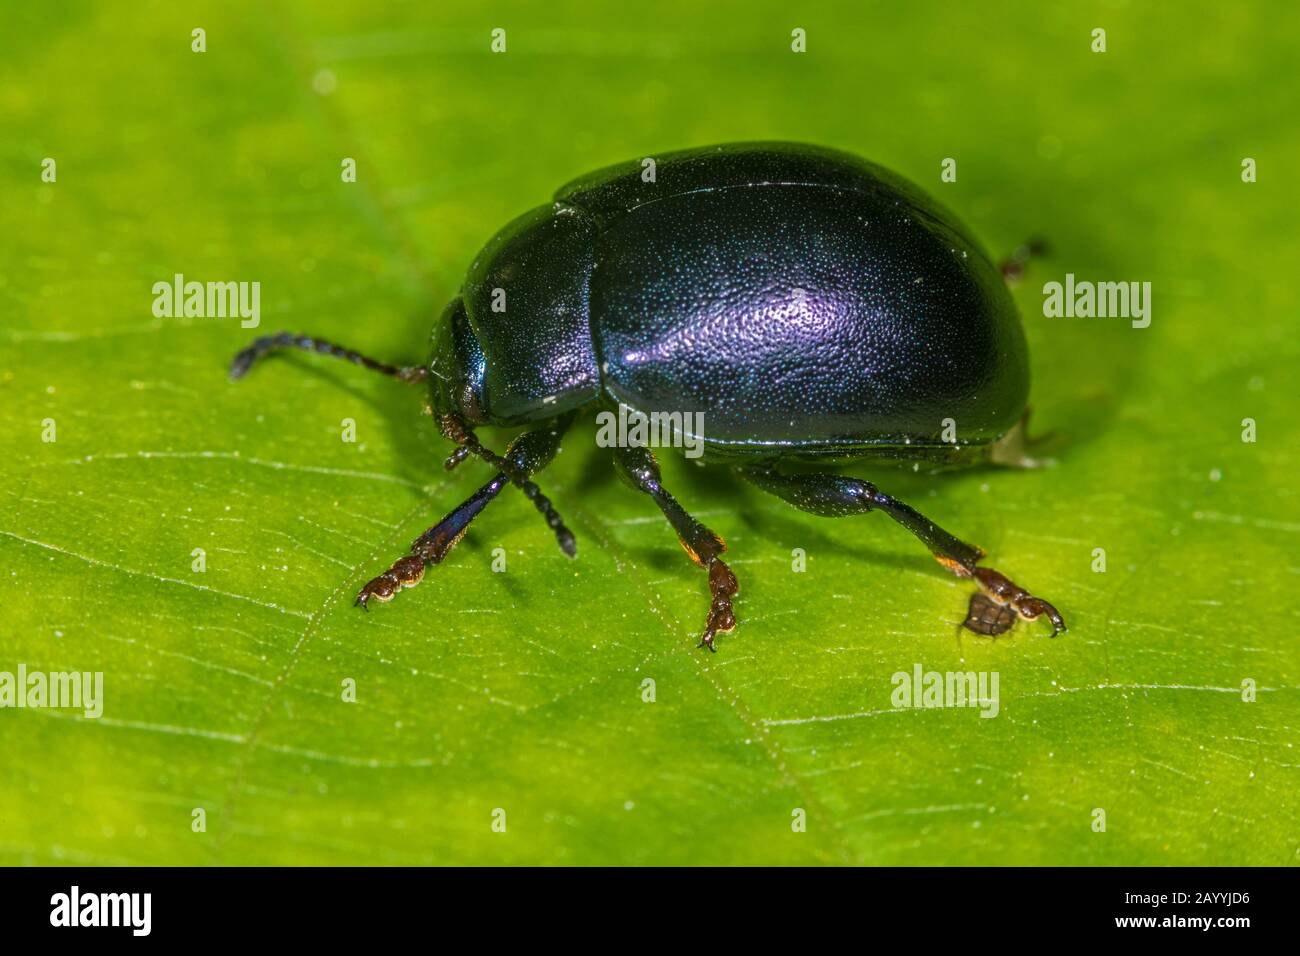 leaf beetle (Chrysolina varians), sits on a leaf, Germany Stock Photo